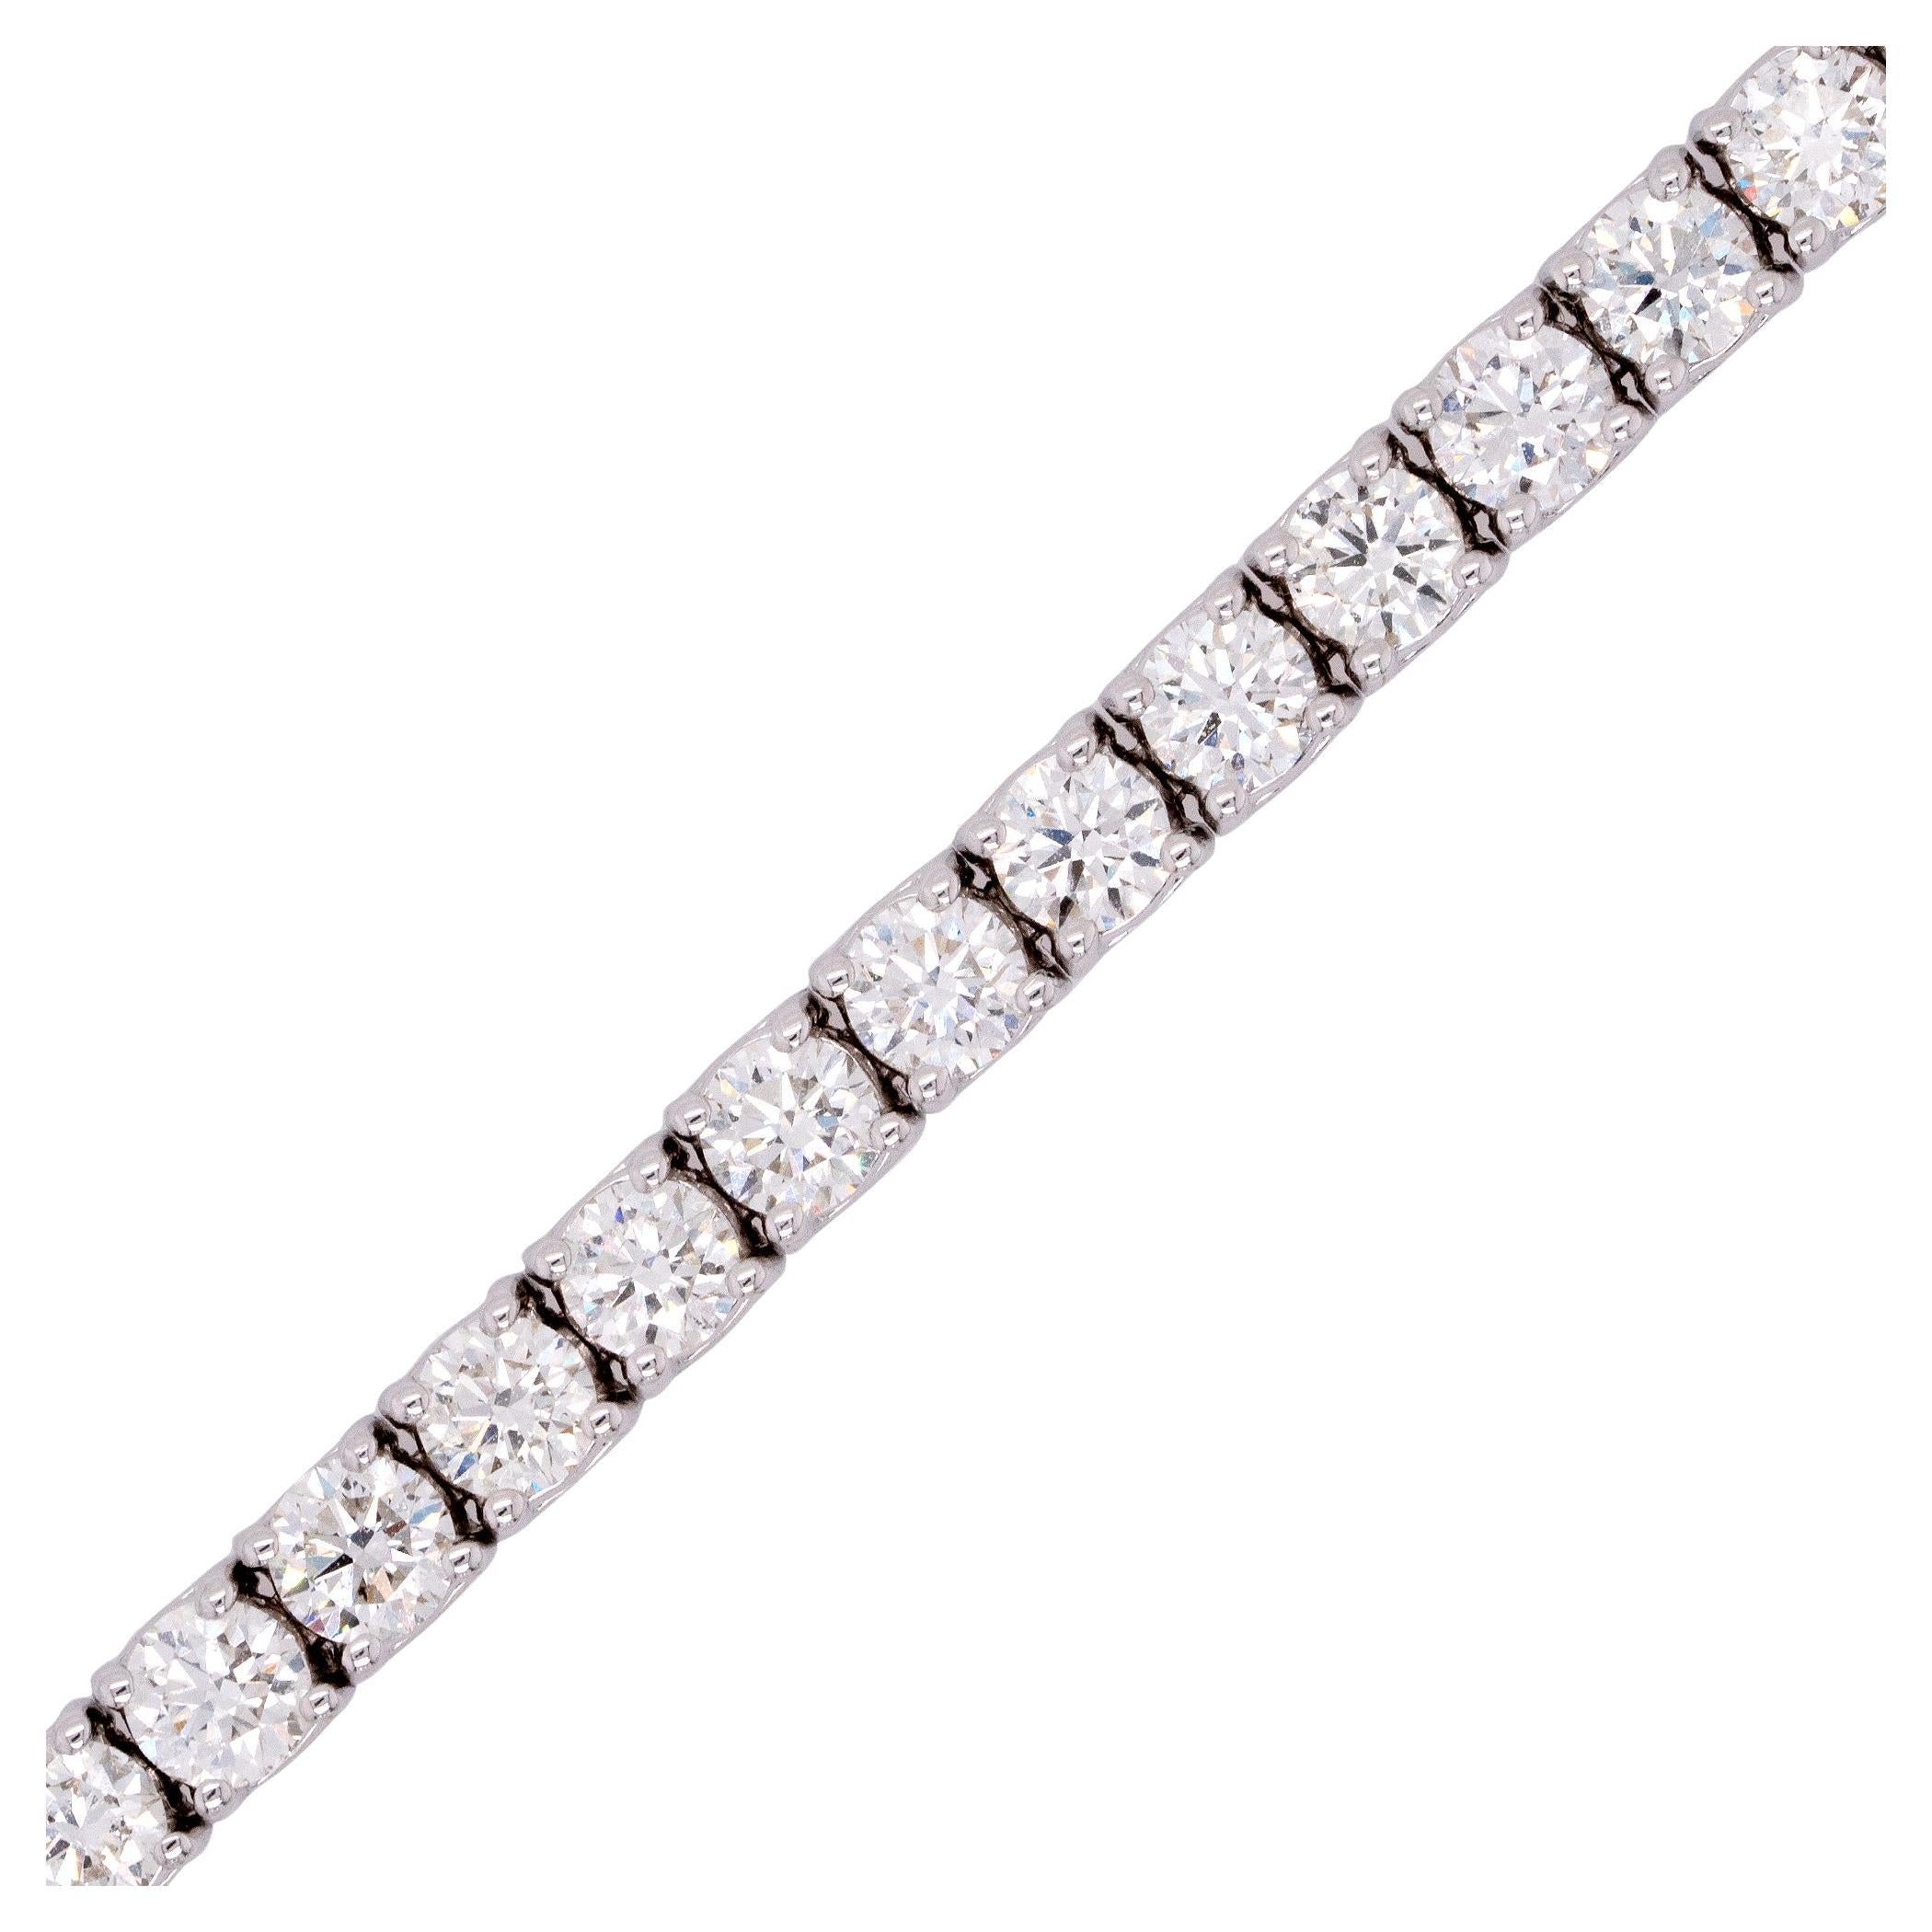 7.03 Carat Round Cut Natural Diamond Tennis Bracelet For Sale